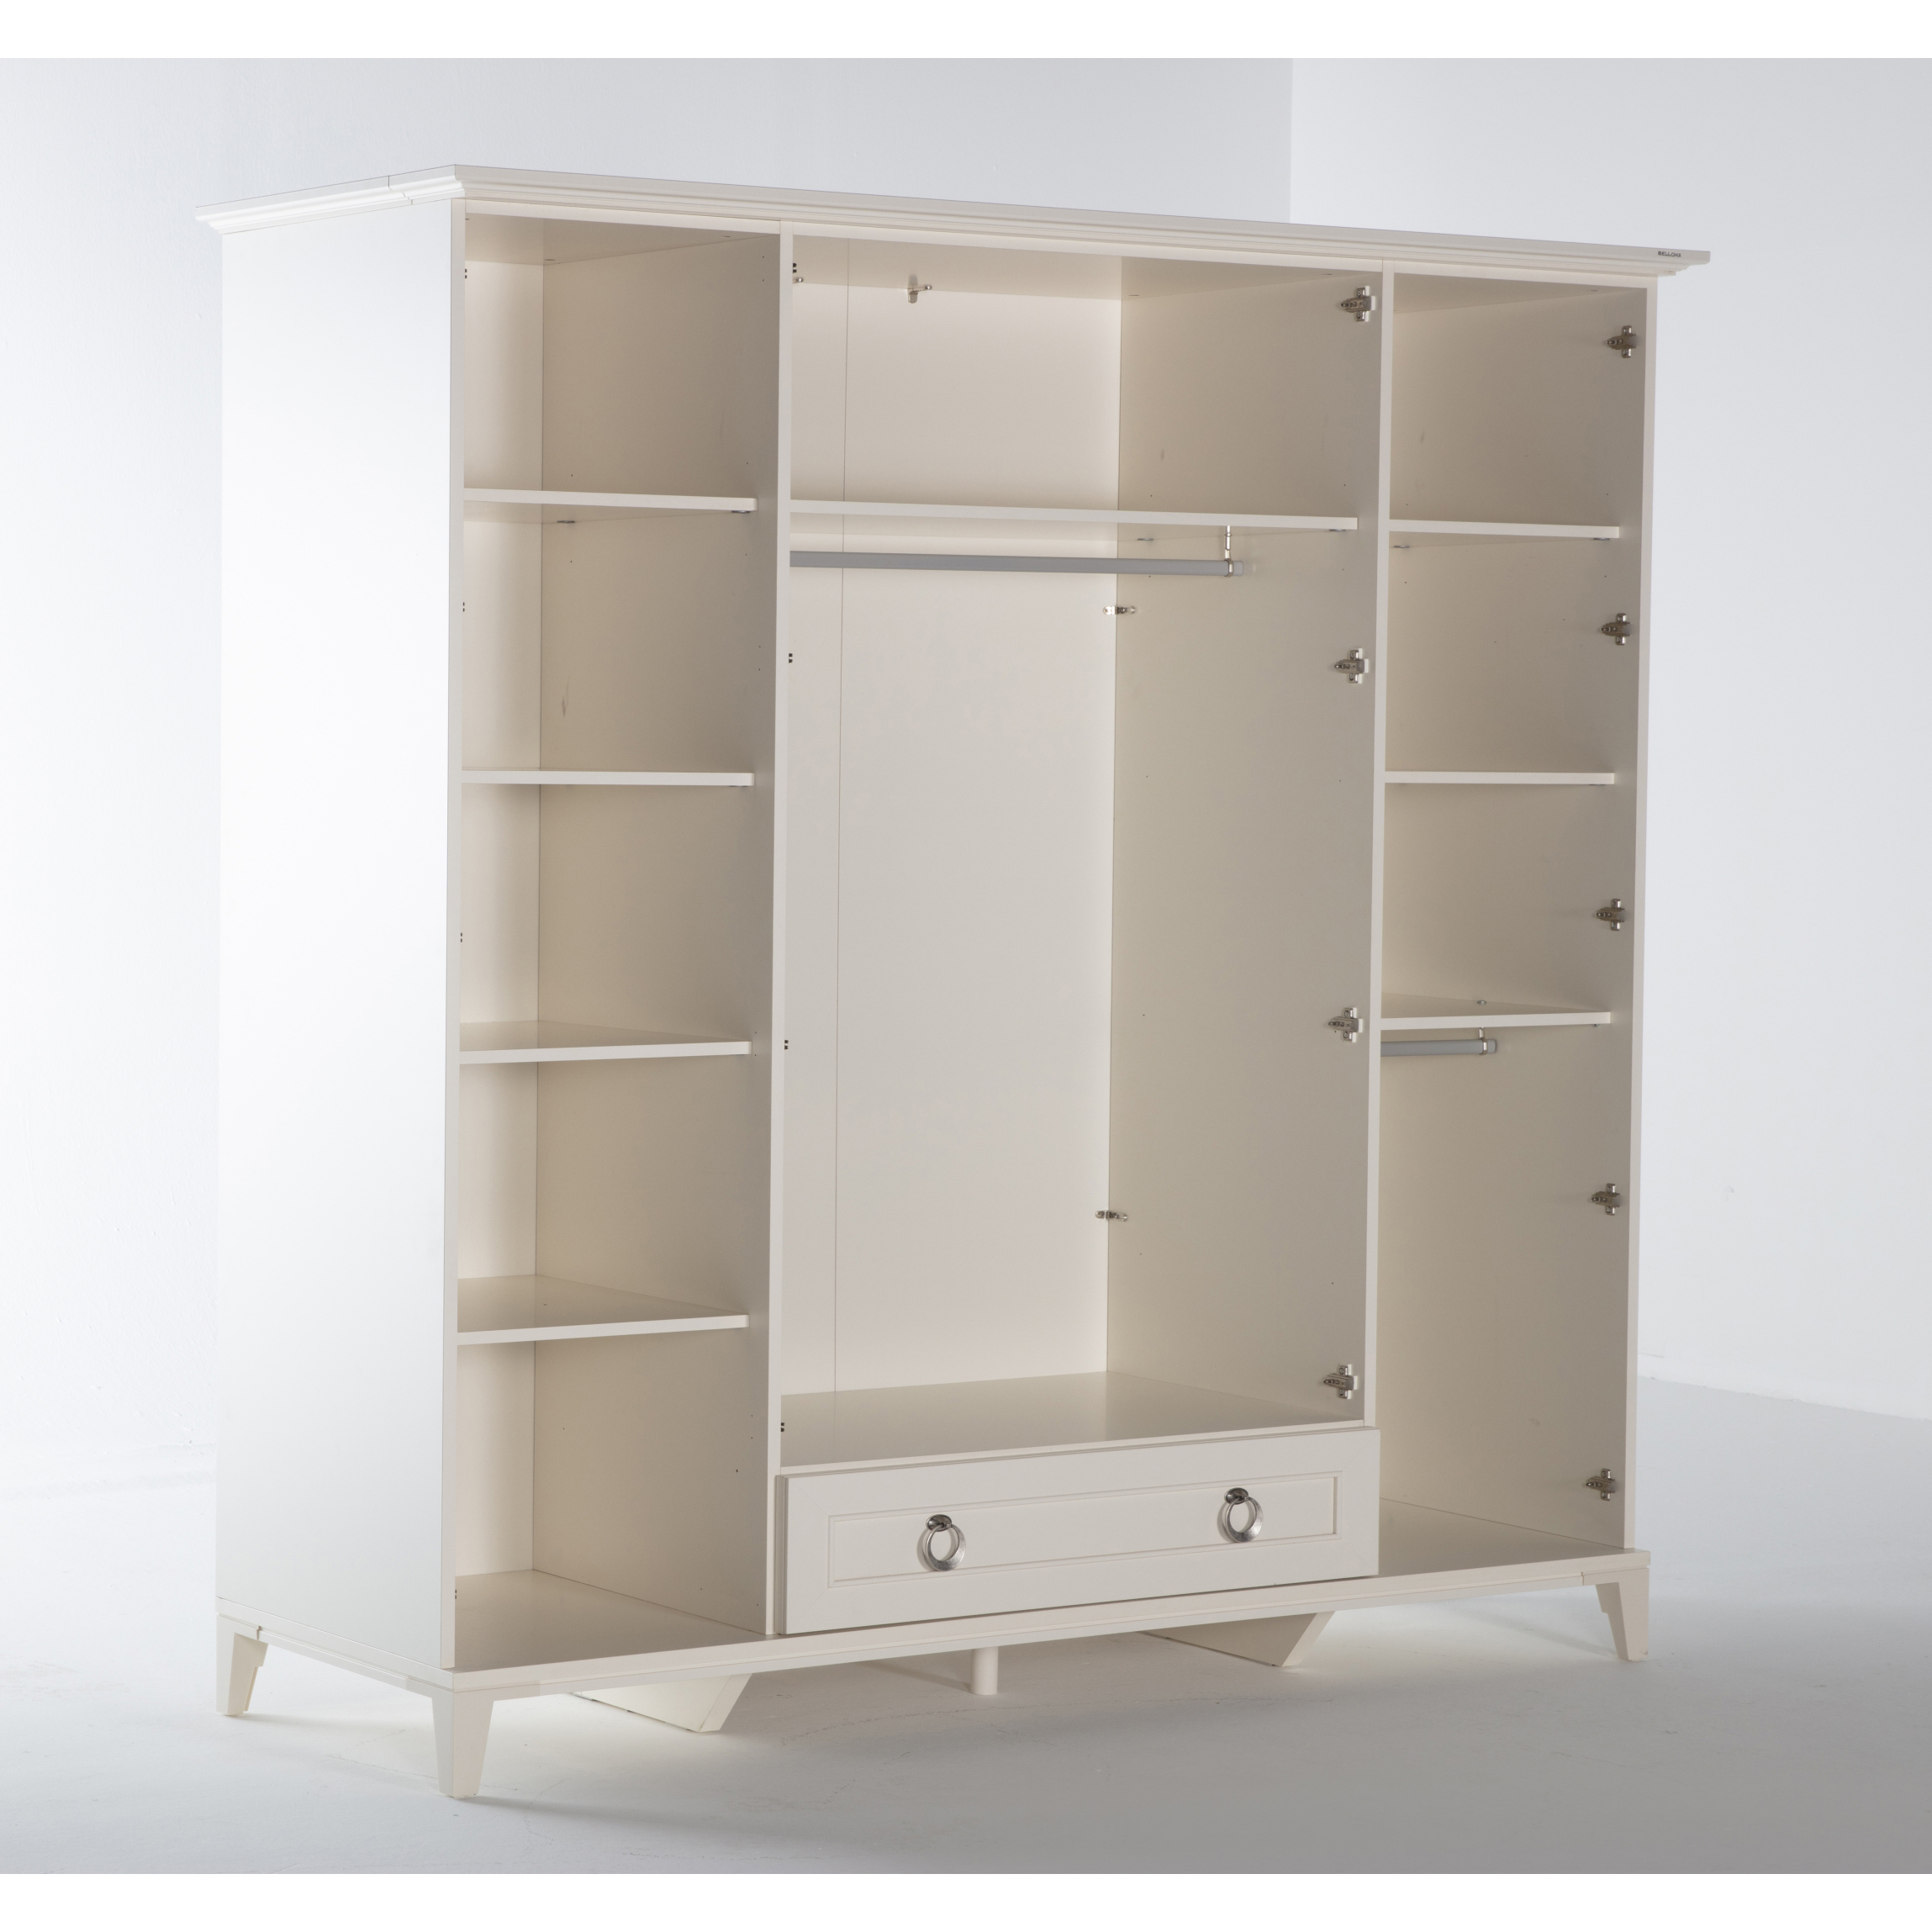 Шкаф платяной Bellona Vilza, 4-х дверный, размер 186х64х219 см (VILZ-20)VILZ-20